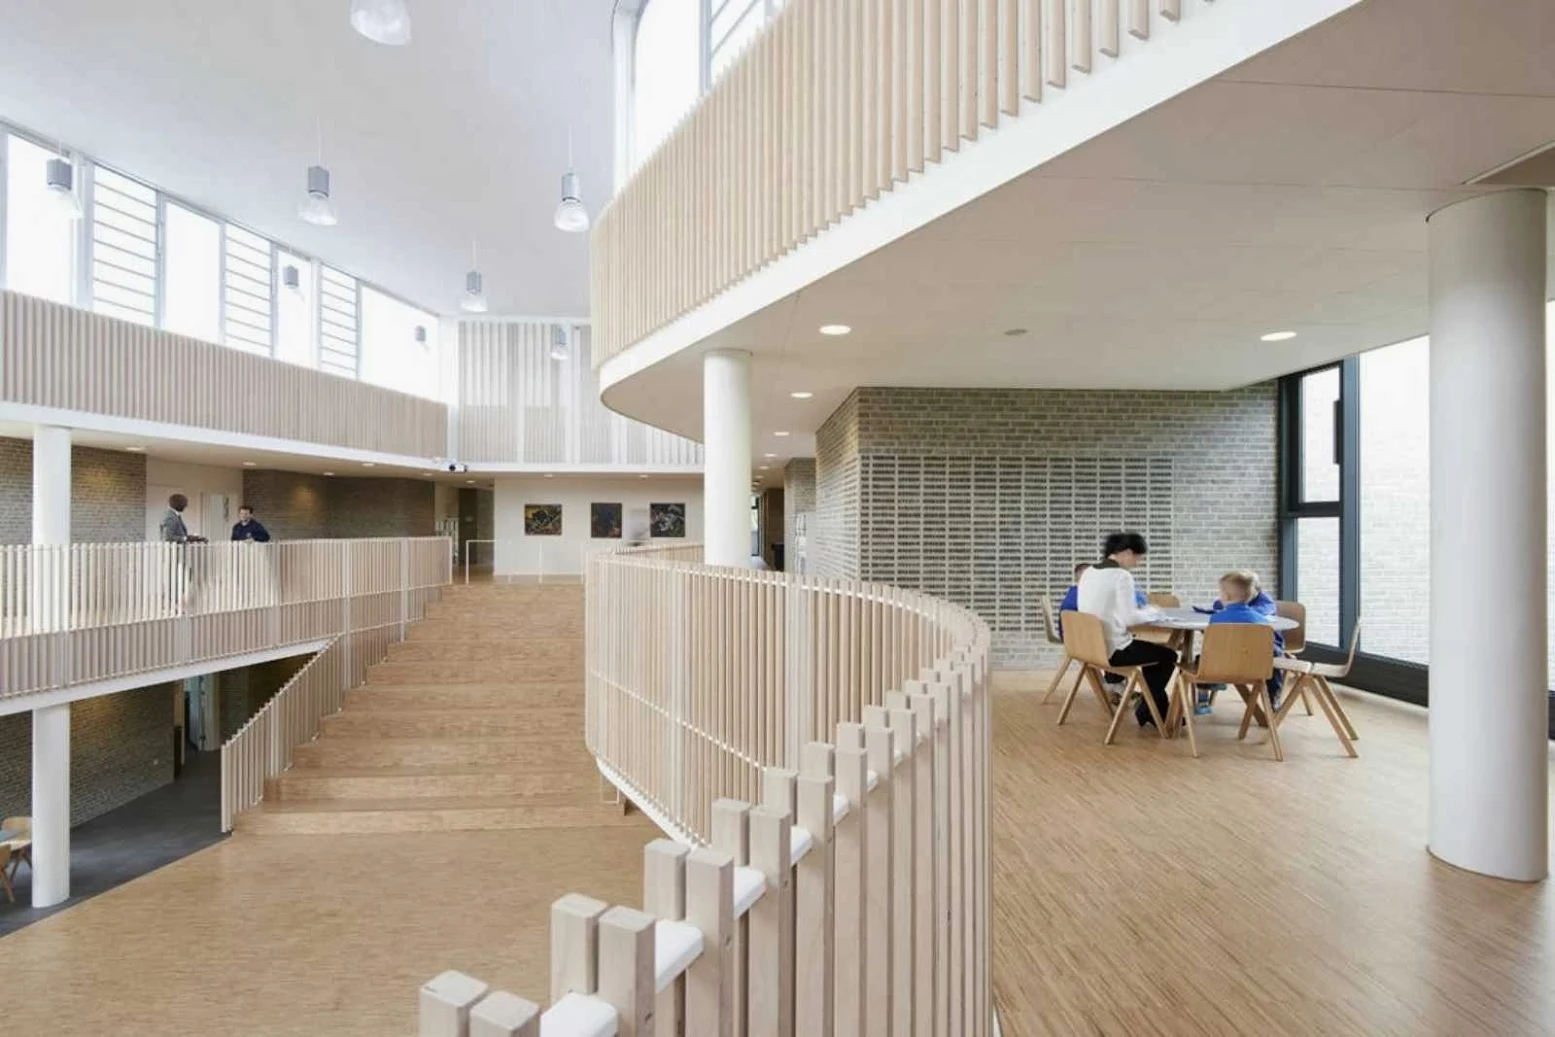 11-International-School-Ikast-Brande-by-C.F.-Møller-Architects